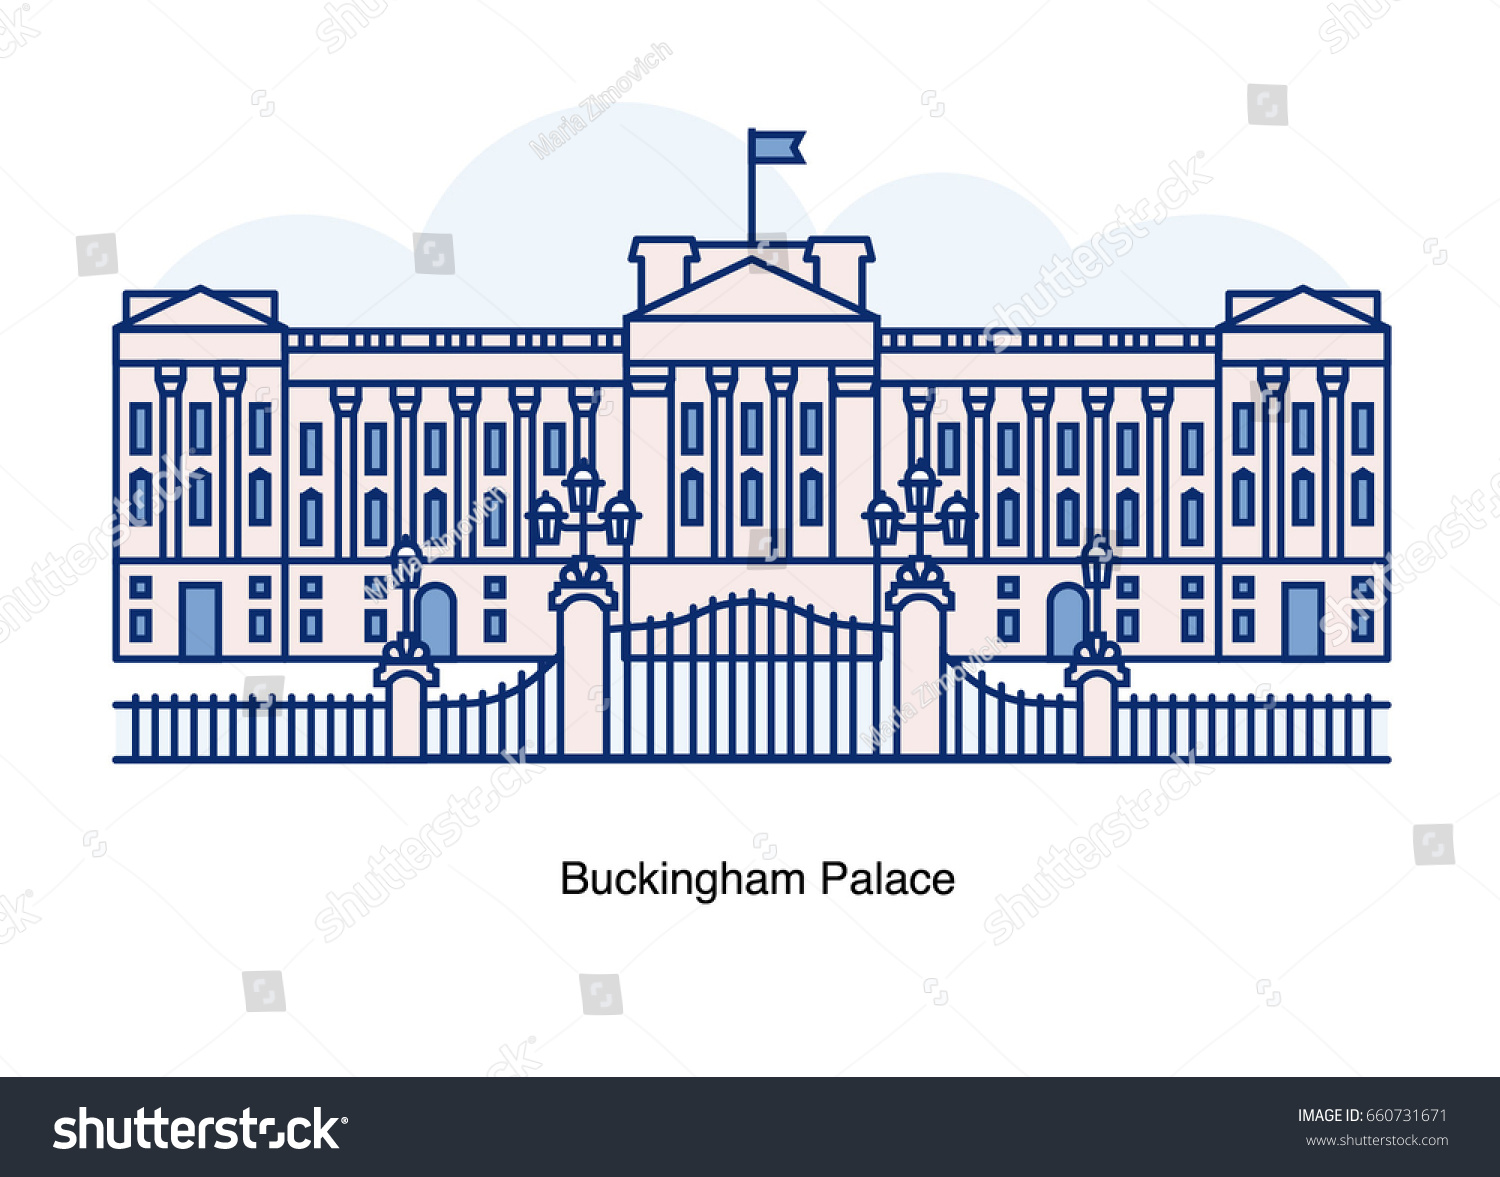 SVG of Line illustration of  Buckingham Palace, London, England. svg